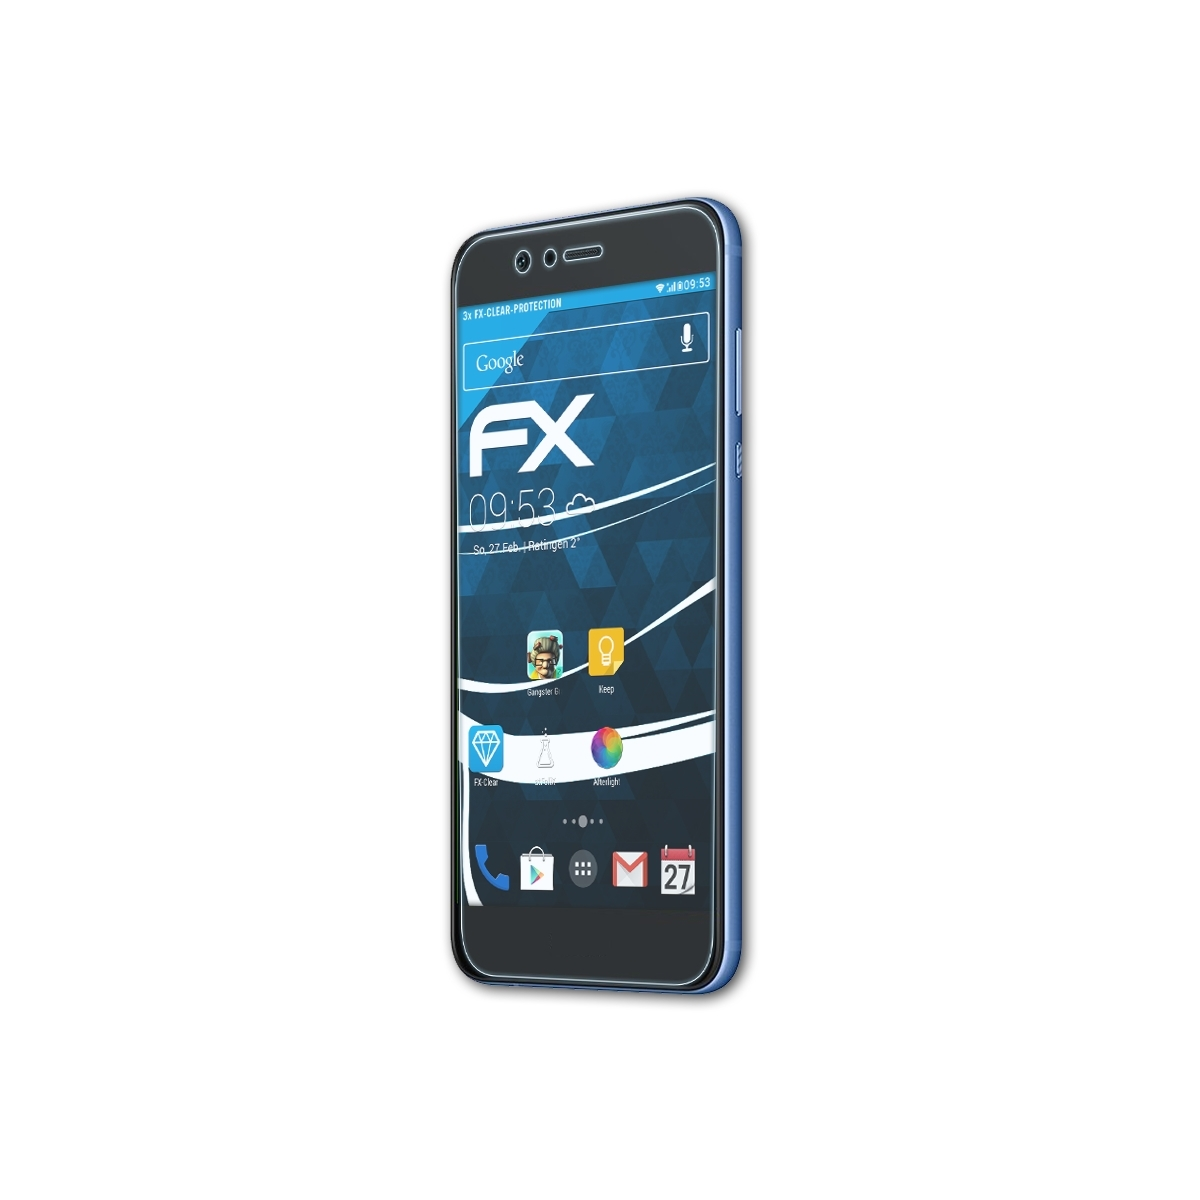 Displayschutz(für Nova 3x Plus) ATFOLIX Huawei 2 FX-Clear